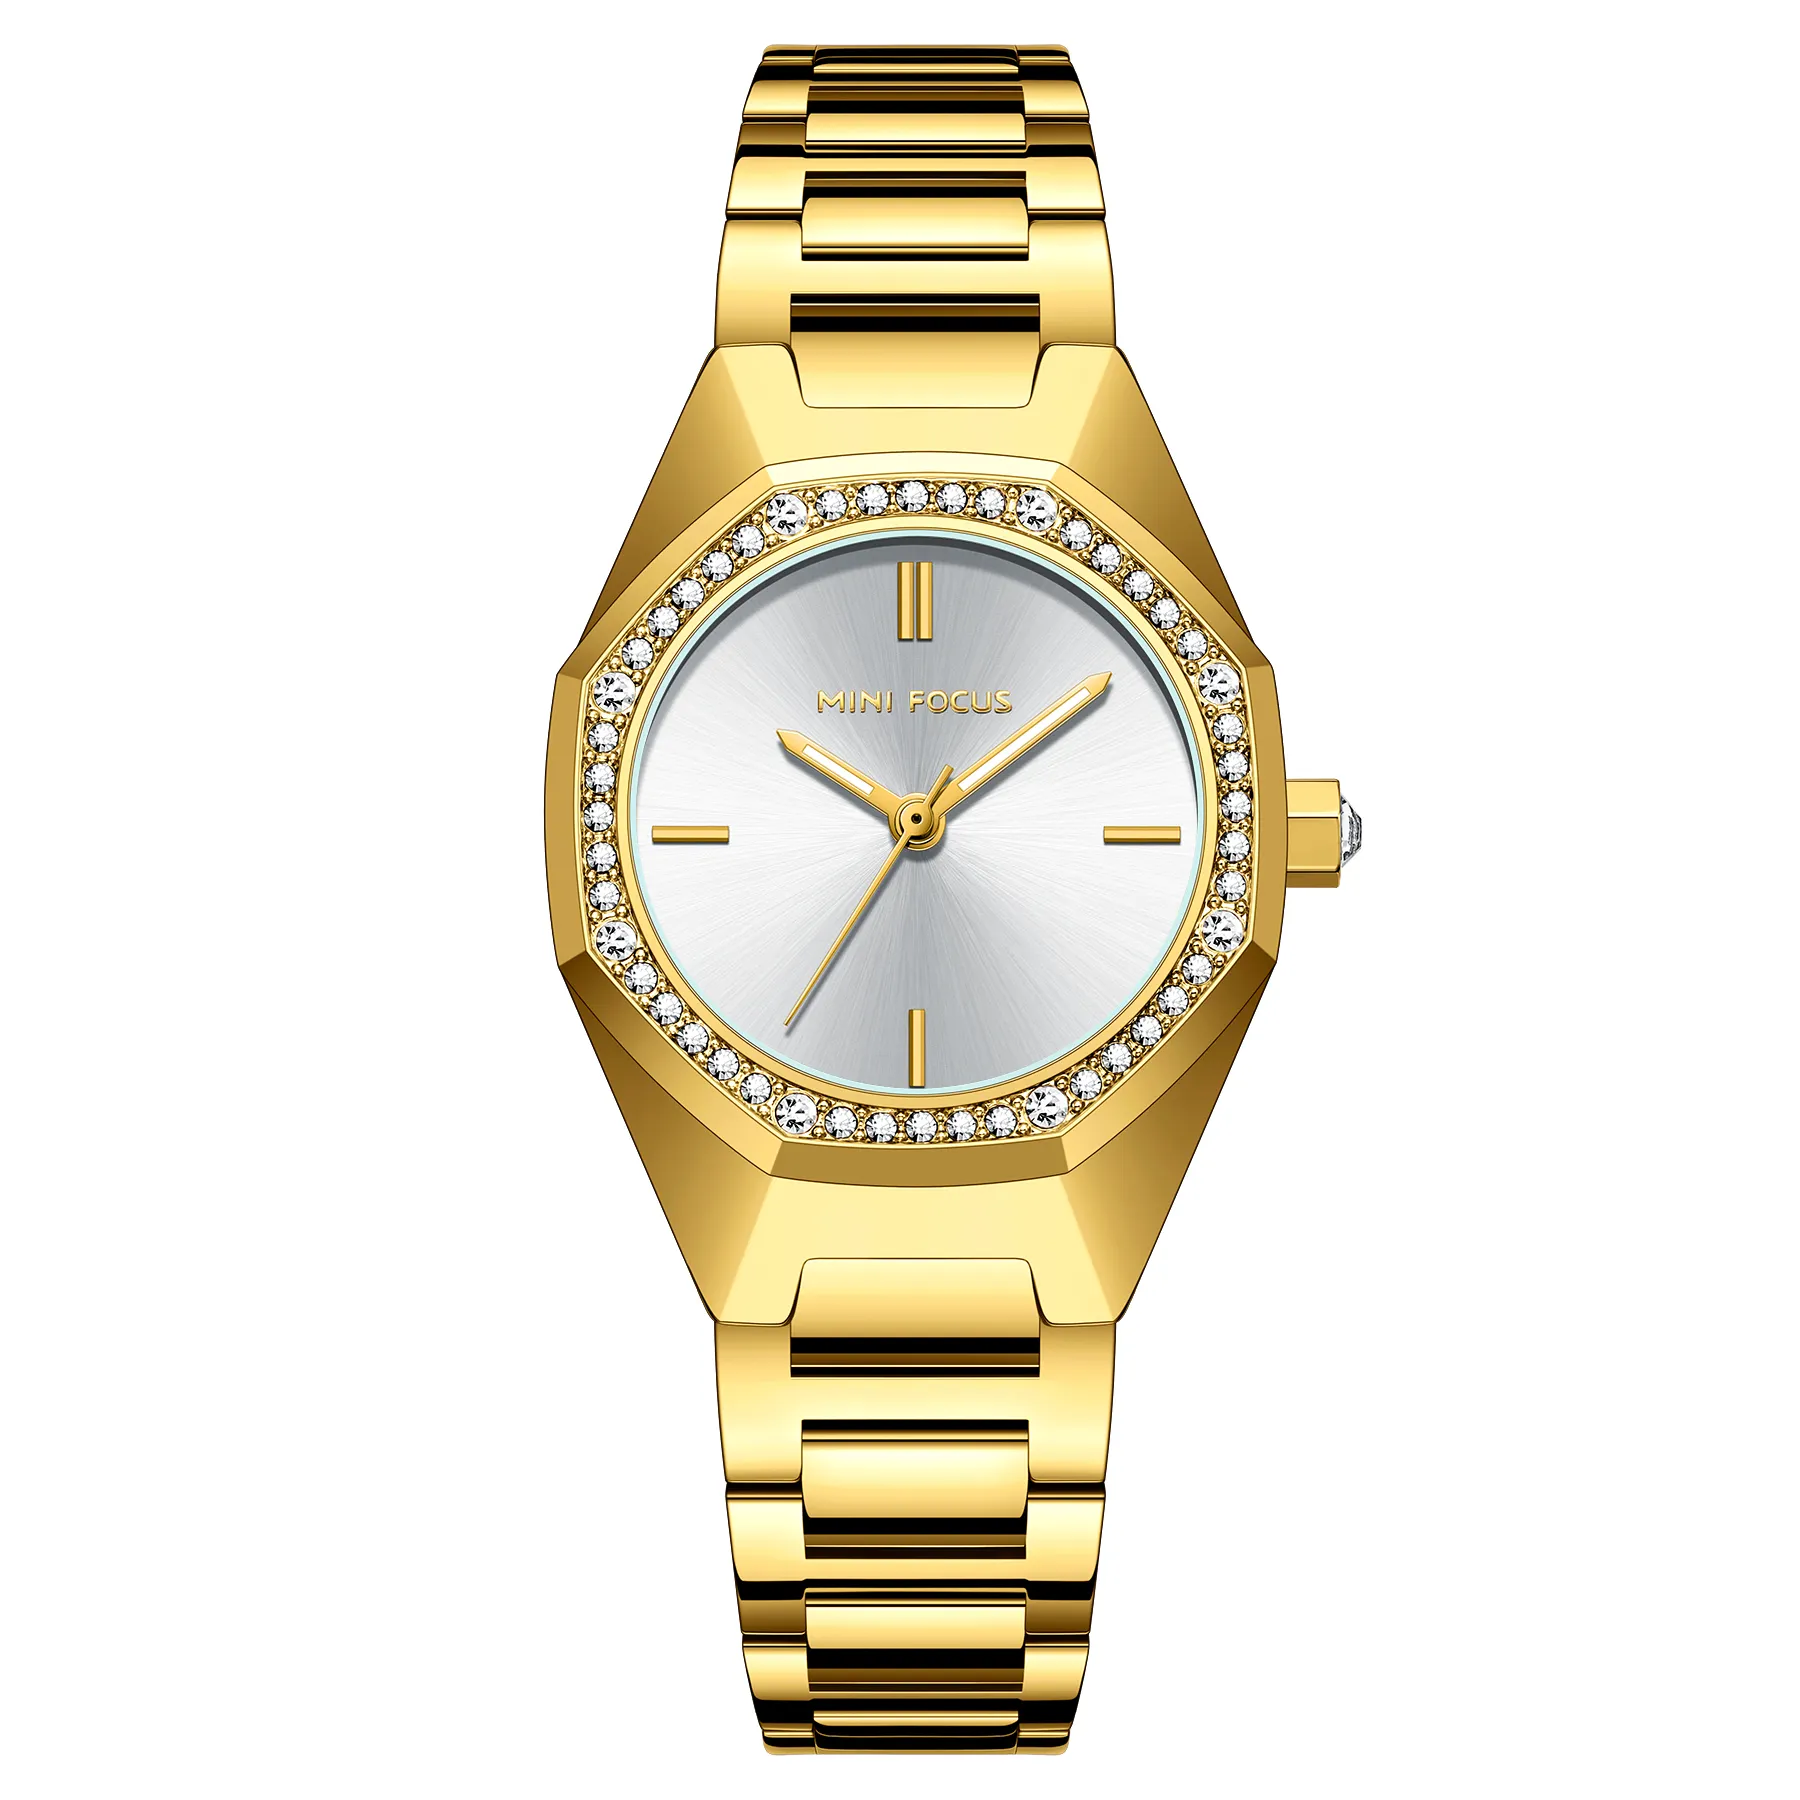 Hot sale mini focus gold plating quartz woman watches jam tangan wanita cheap wristwatches for women pretty diamond ladies watch